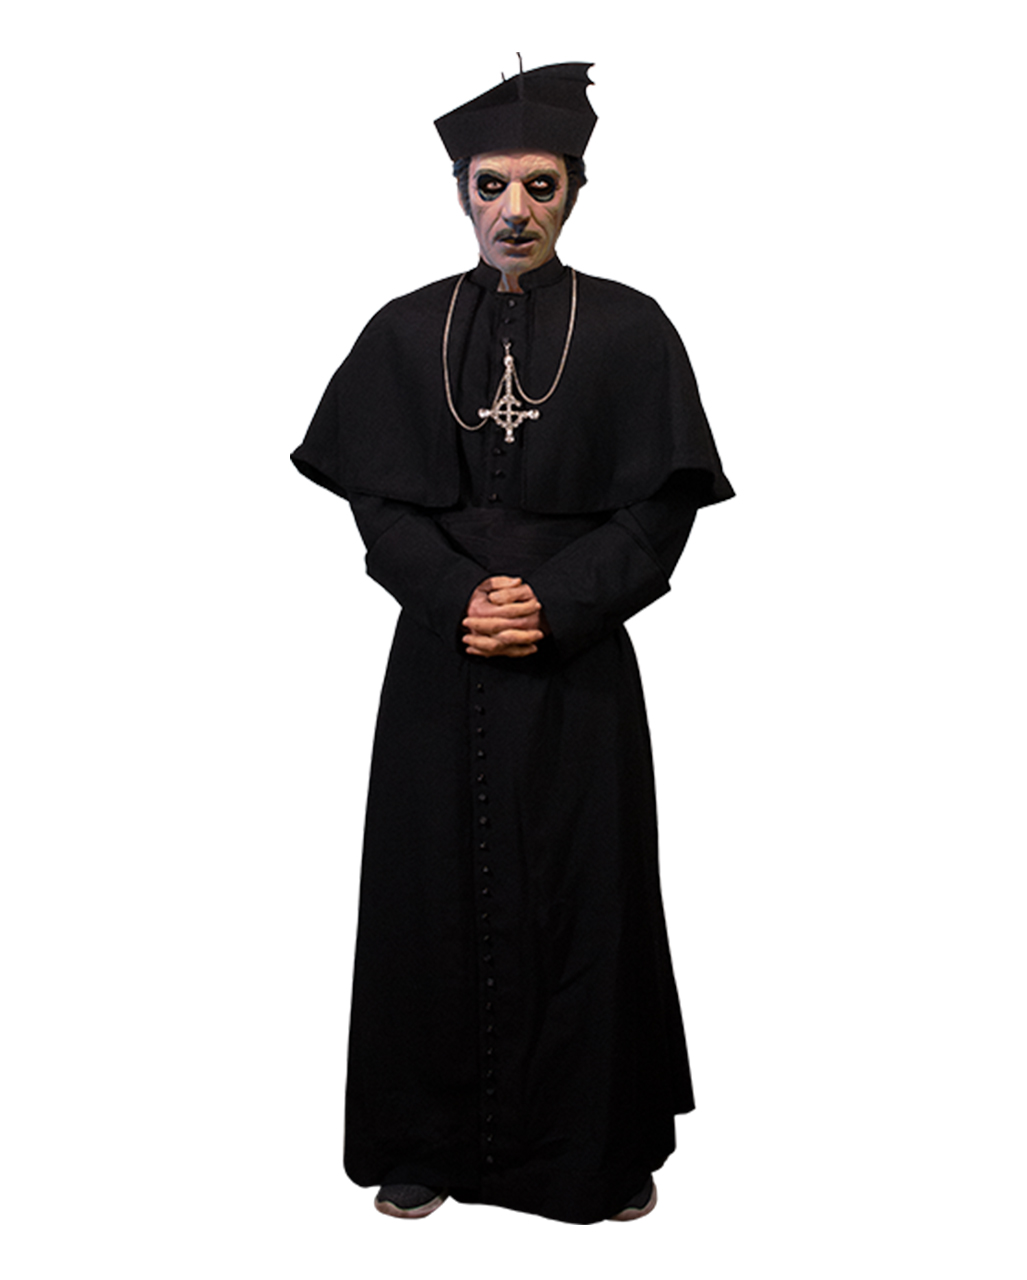 Ghost - Cardinal Copia Replica Costume buy online | Horror-Shop.com